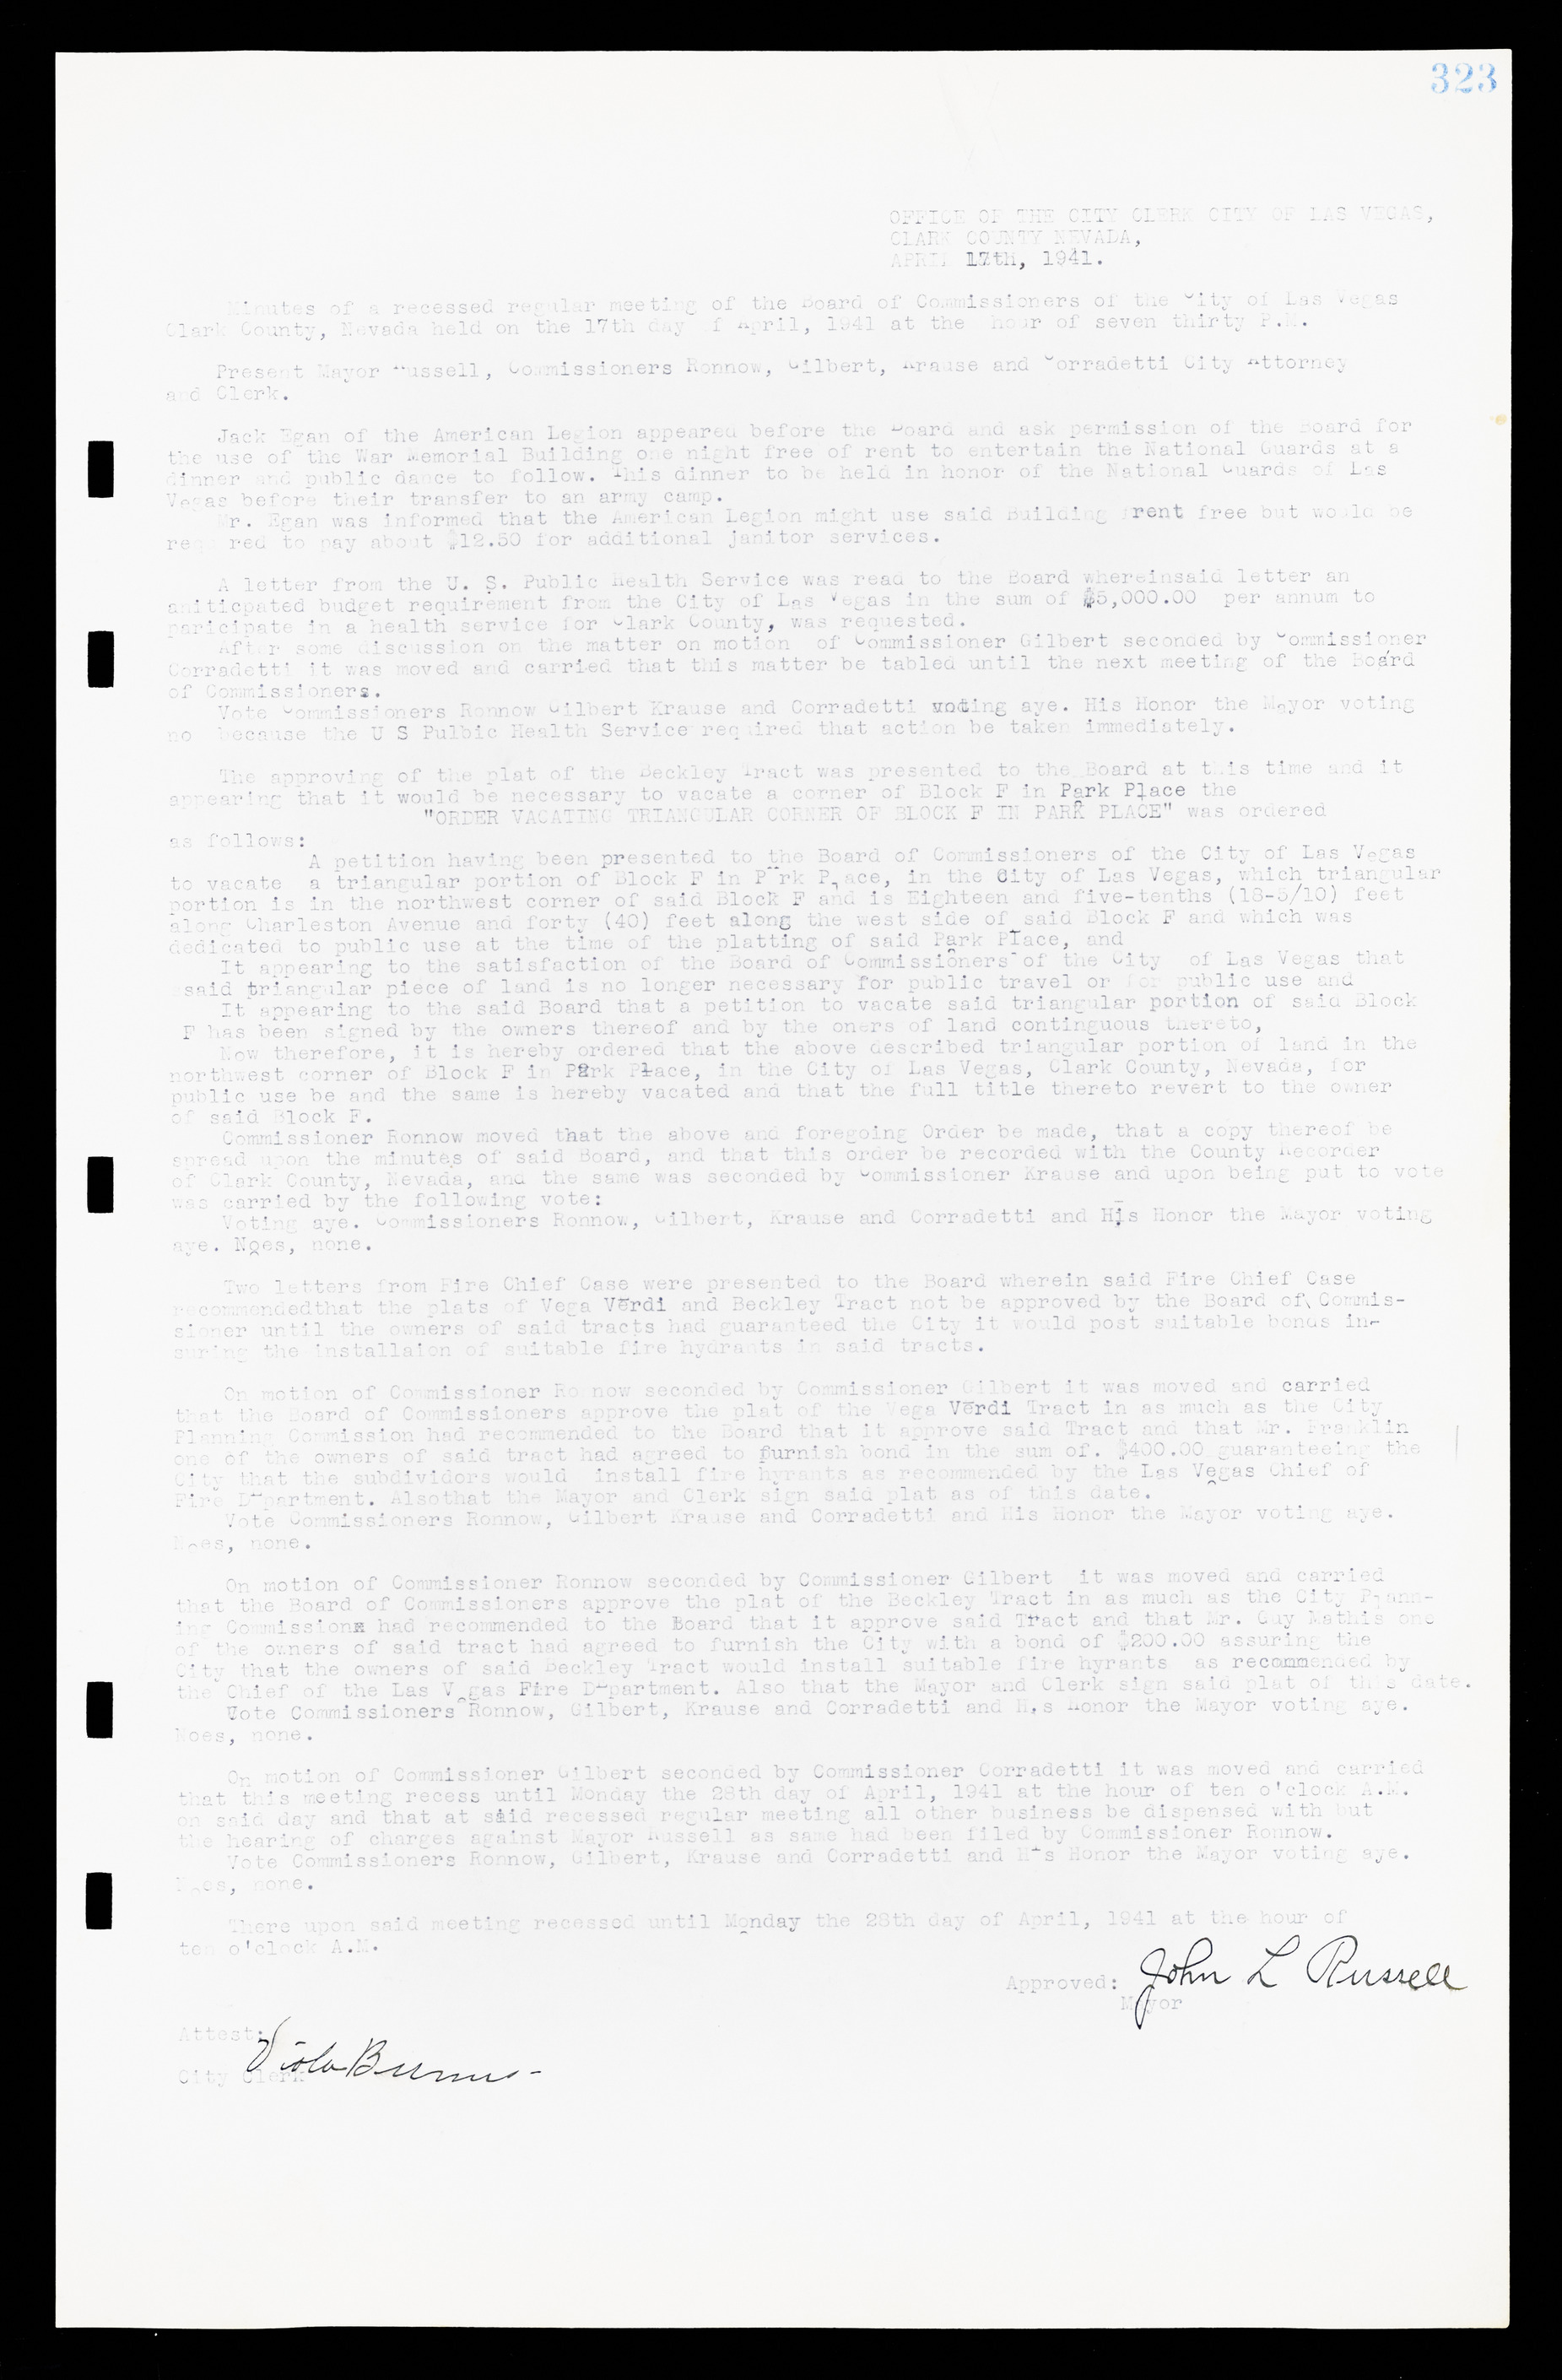 Las Vegas City Commission Minutes, February 17, 1937 to August 4, 1942, lvc000004-347